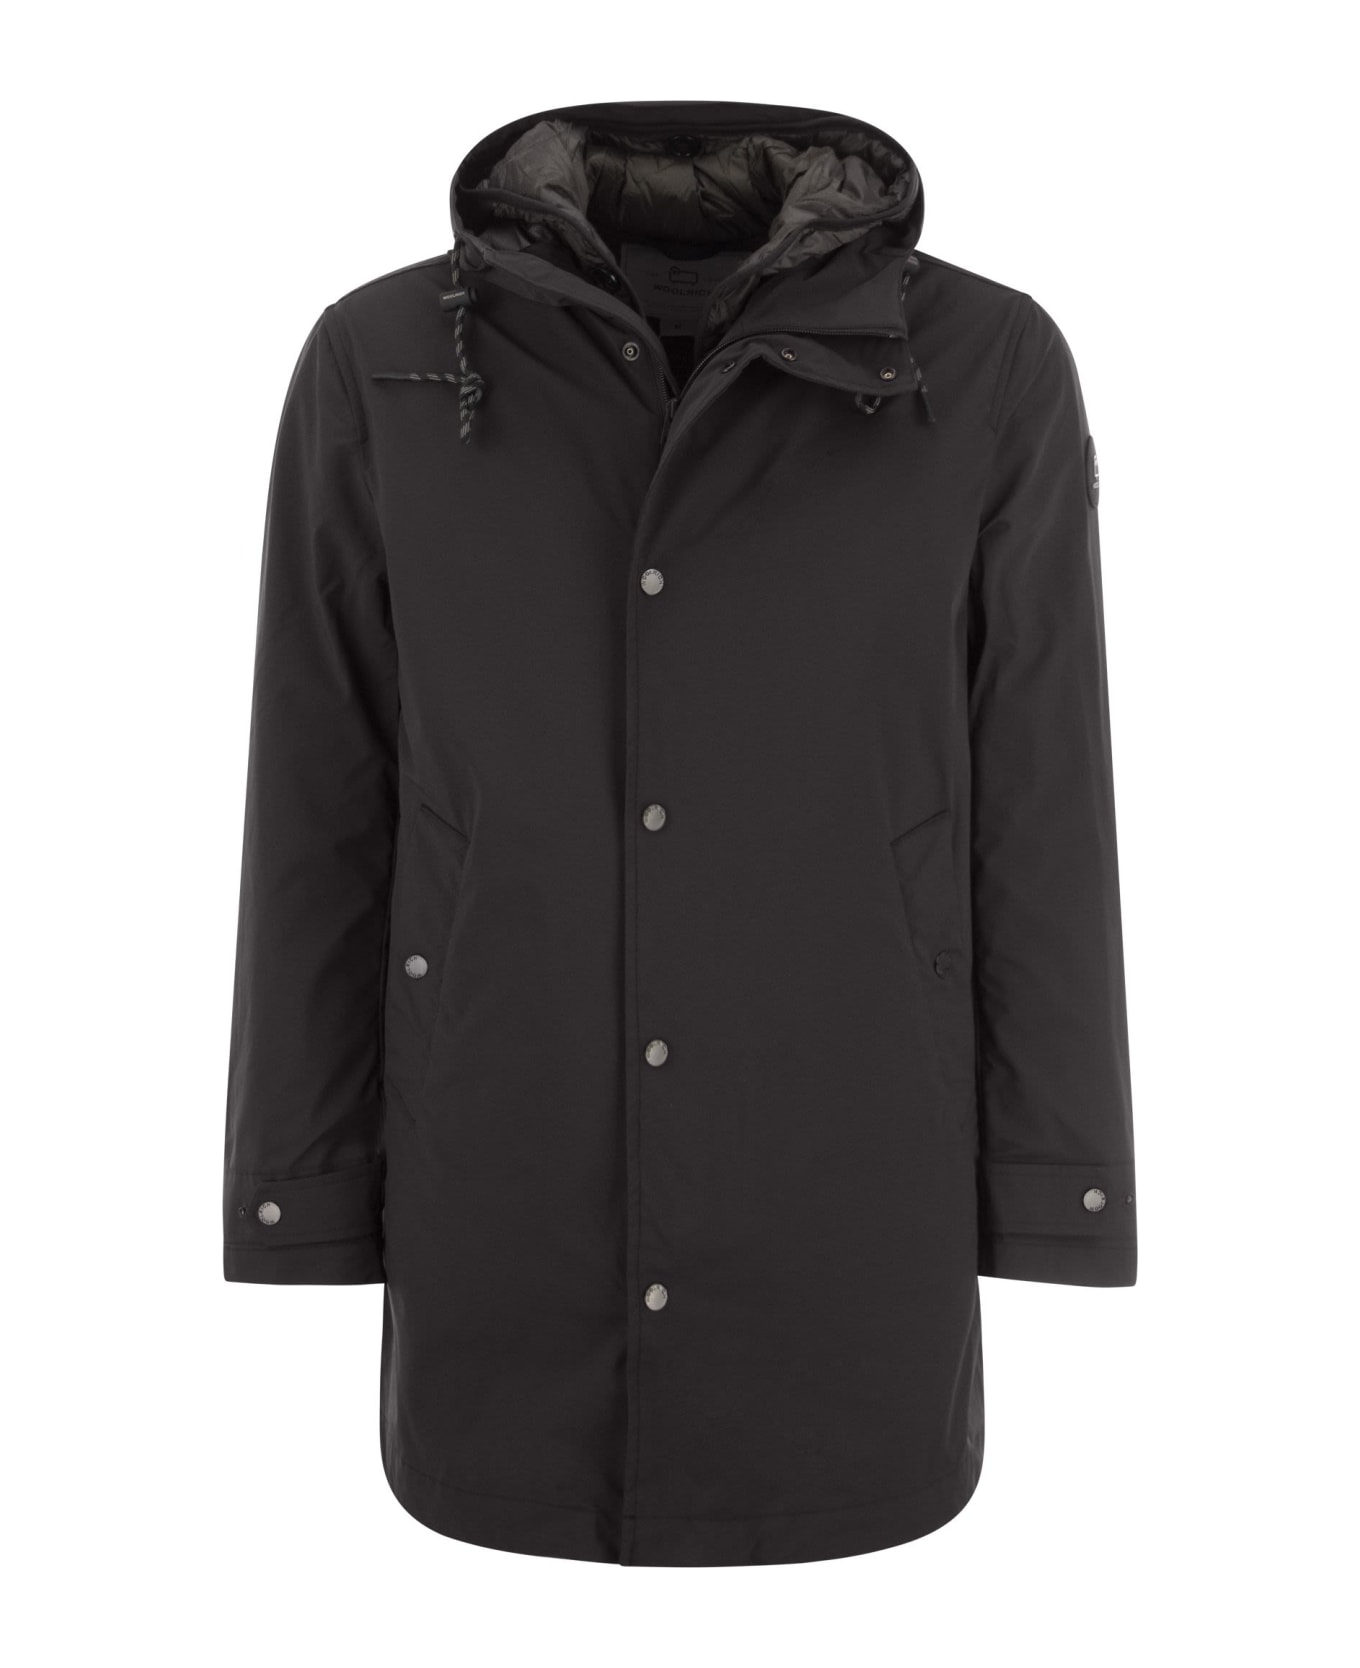 Woolrich 3-in-1 Hooded Jacket - Black